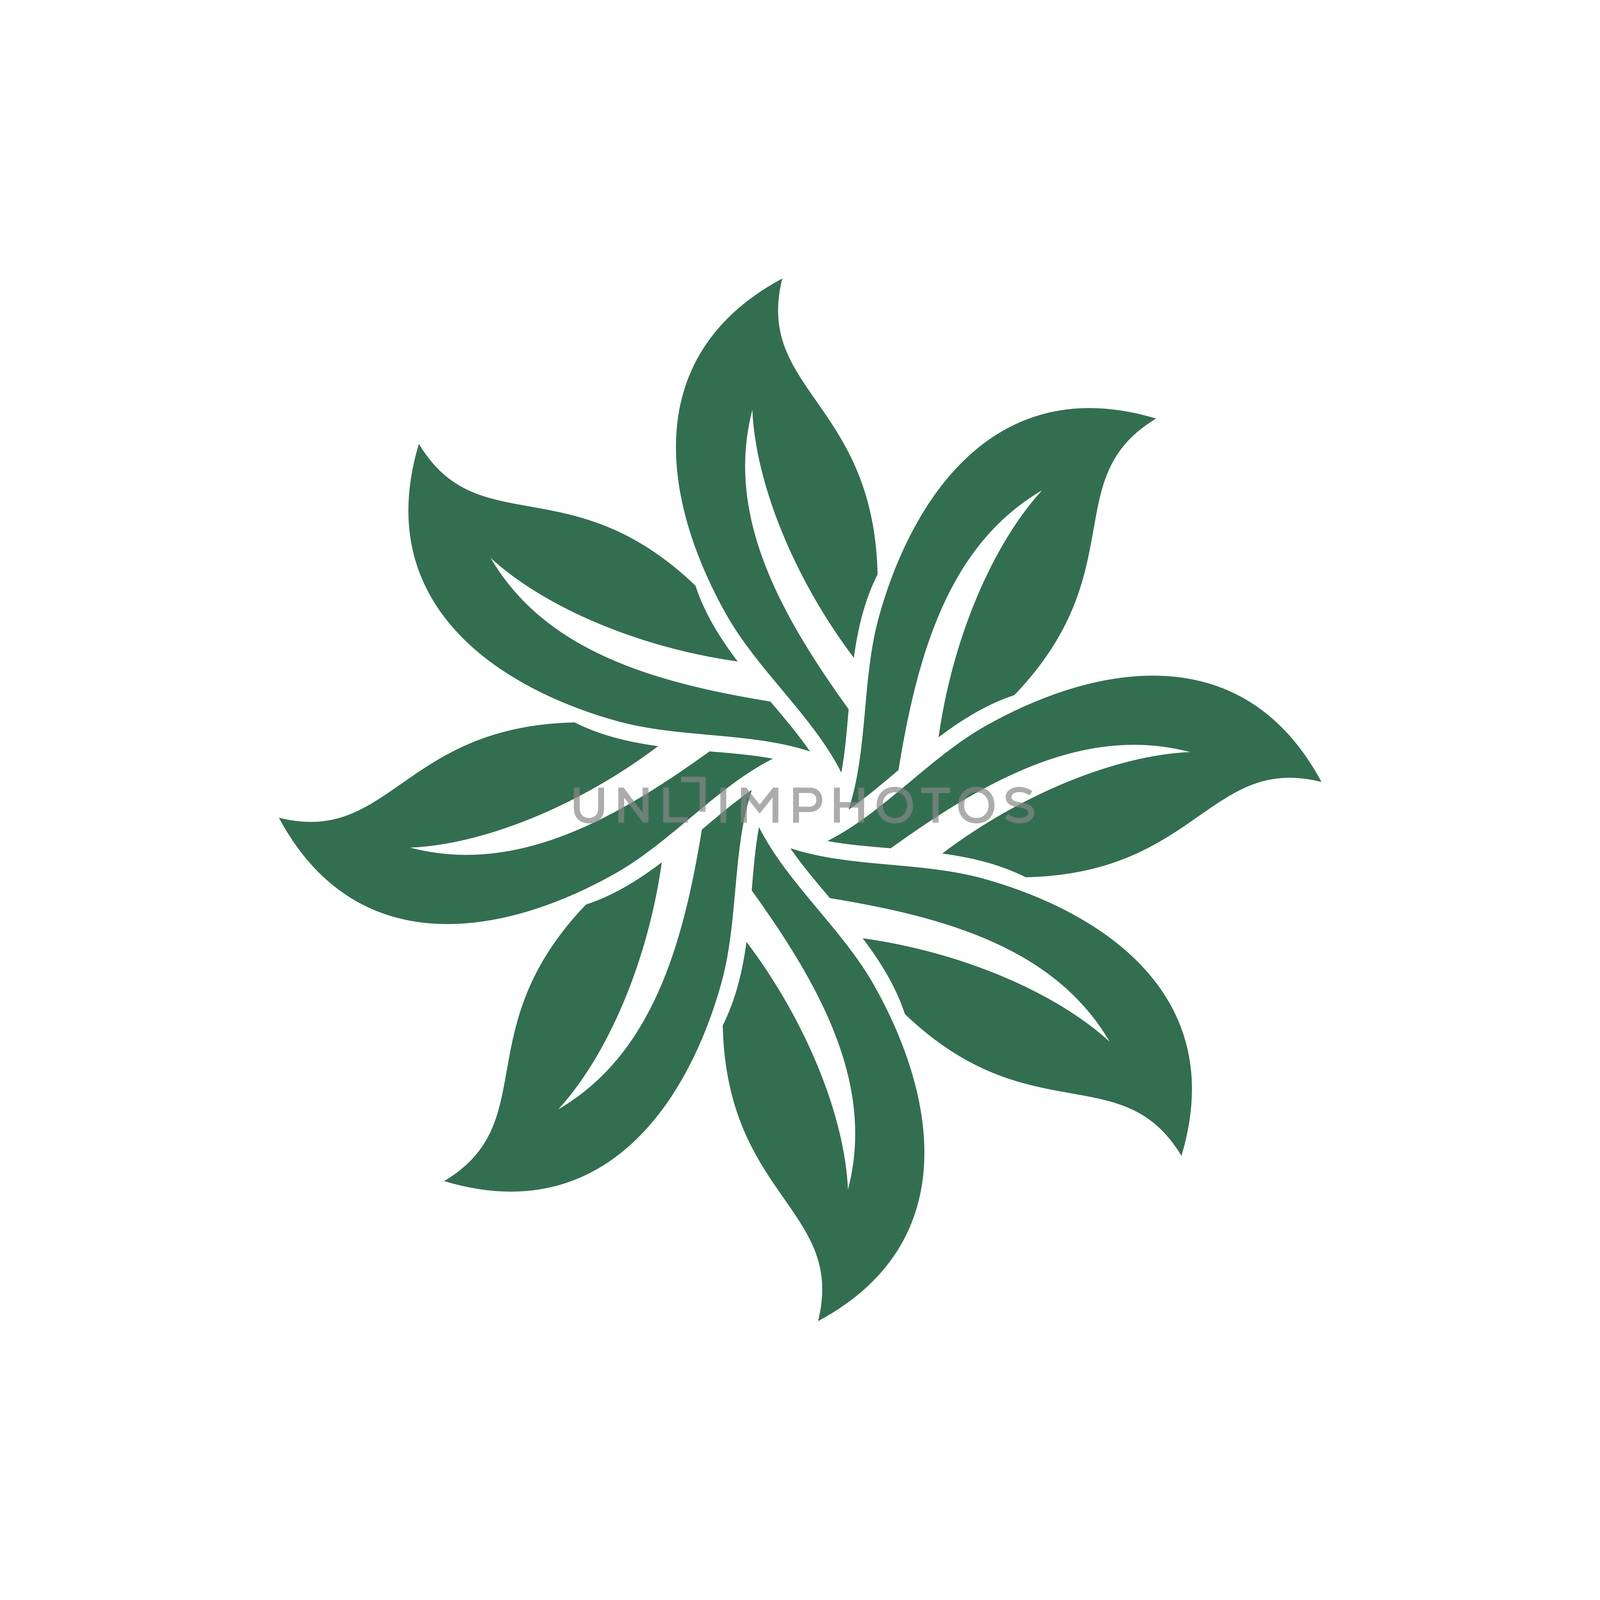 Green Leaves Flower Logo Template Illustration Design. Vector EPS 10. by soponyono1